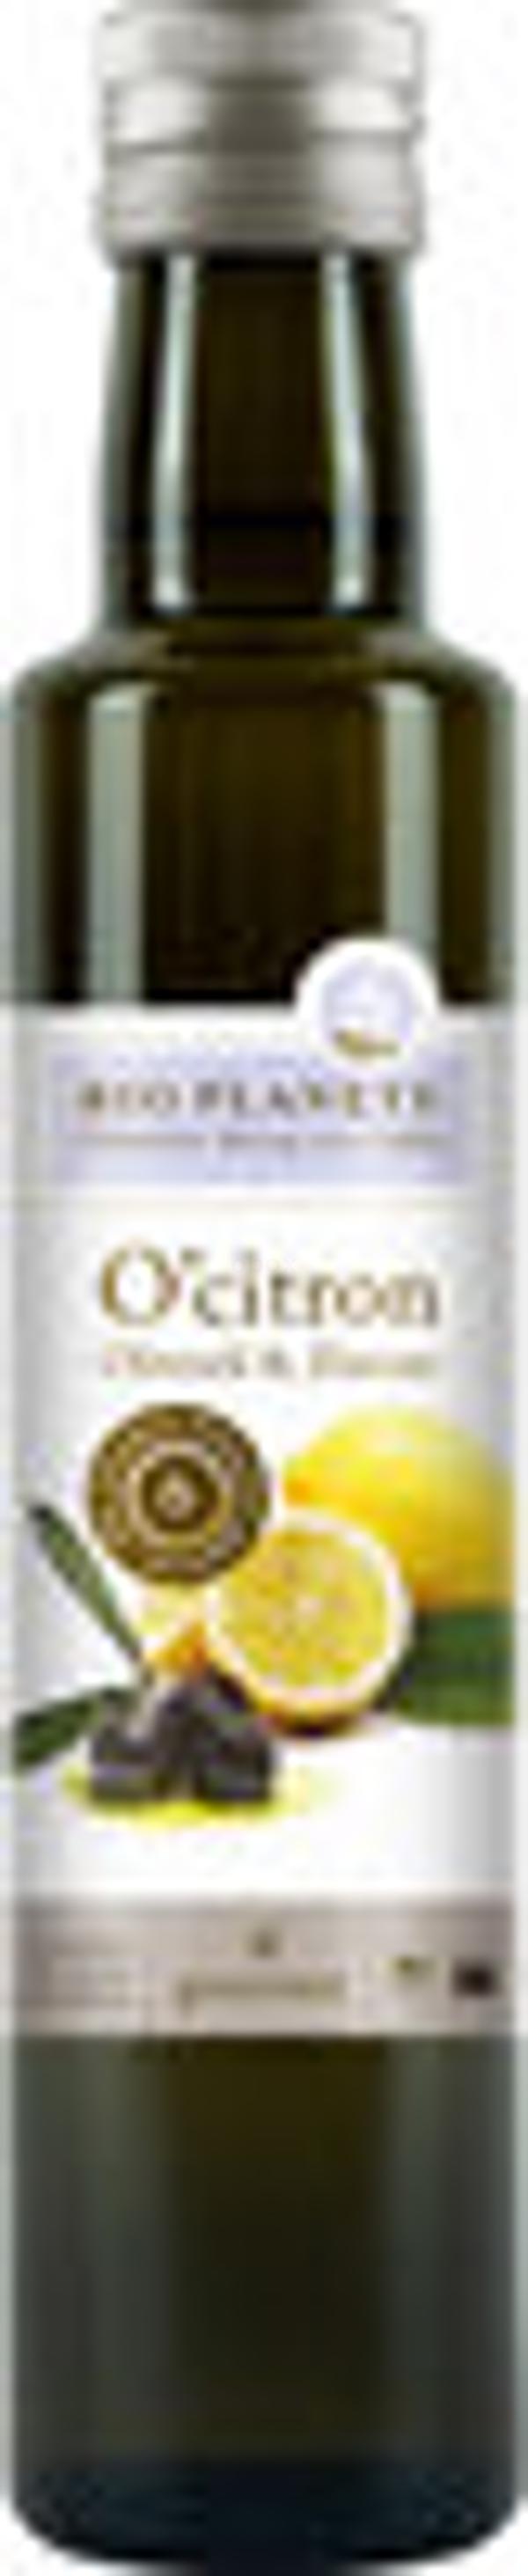 Produktfoto zu "O' citron" Olivenöl & Zitrone 250ml